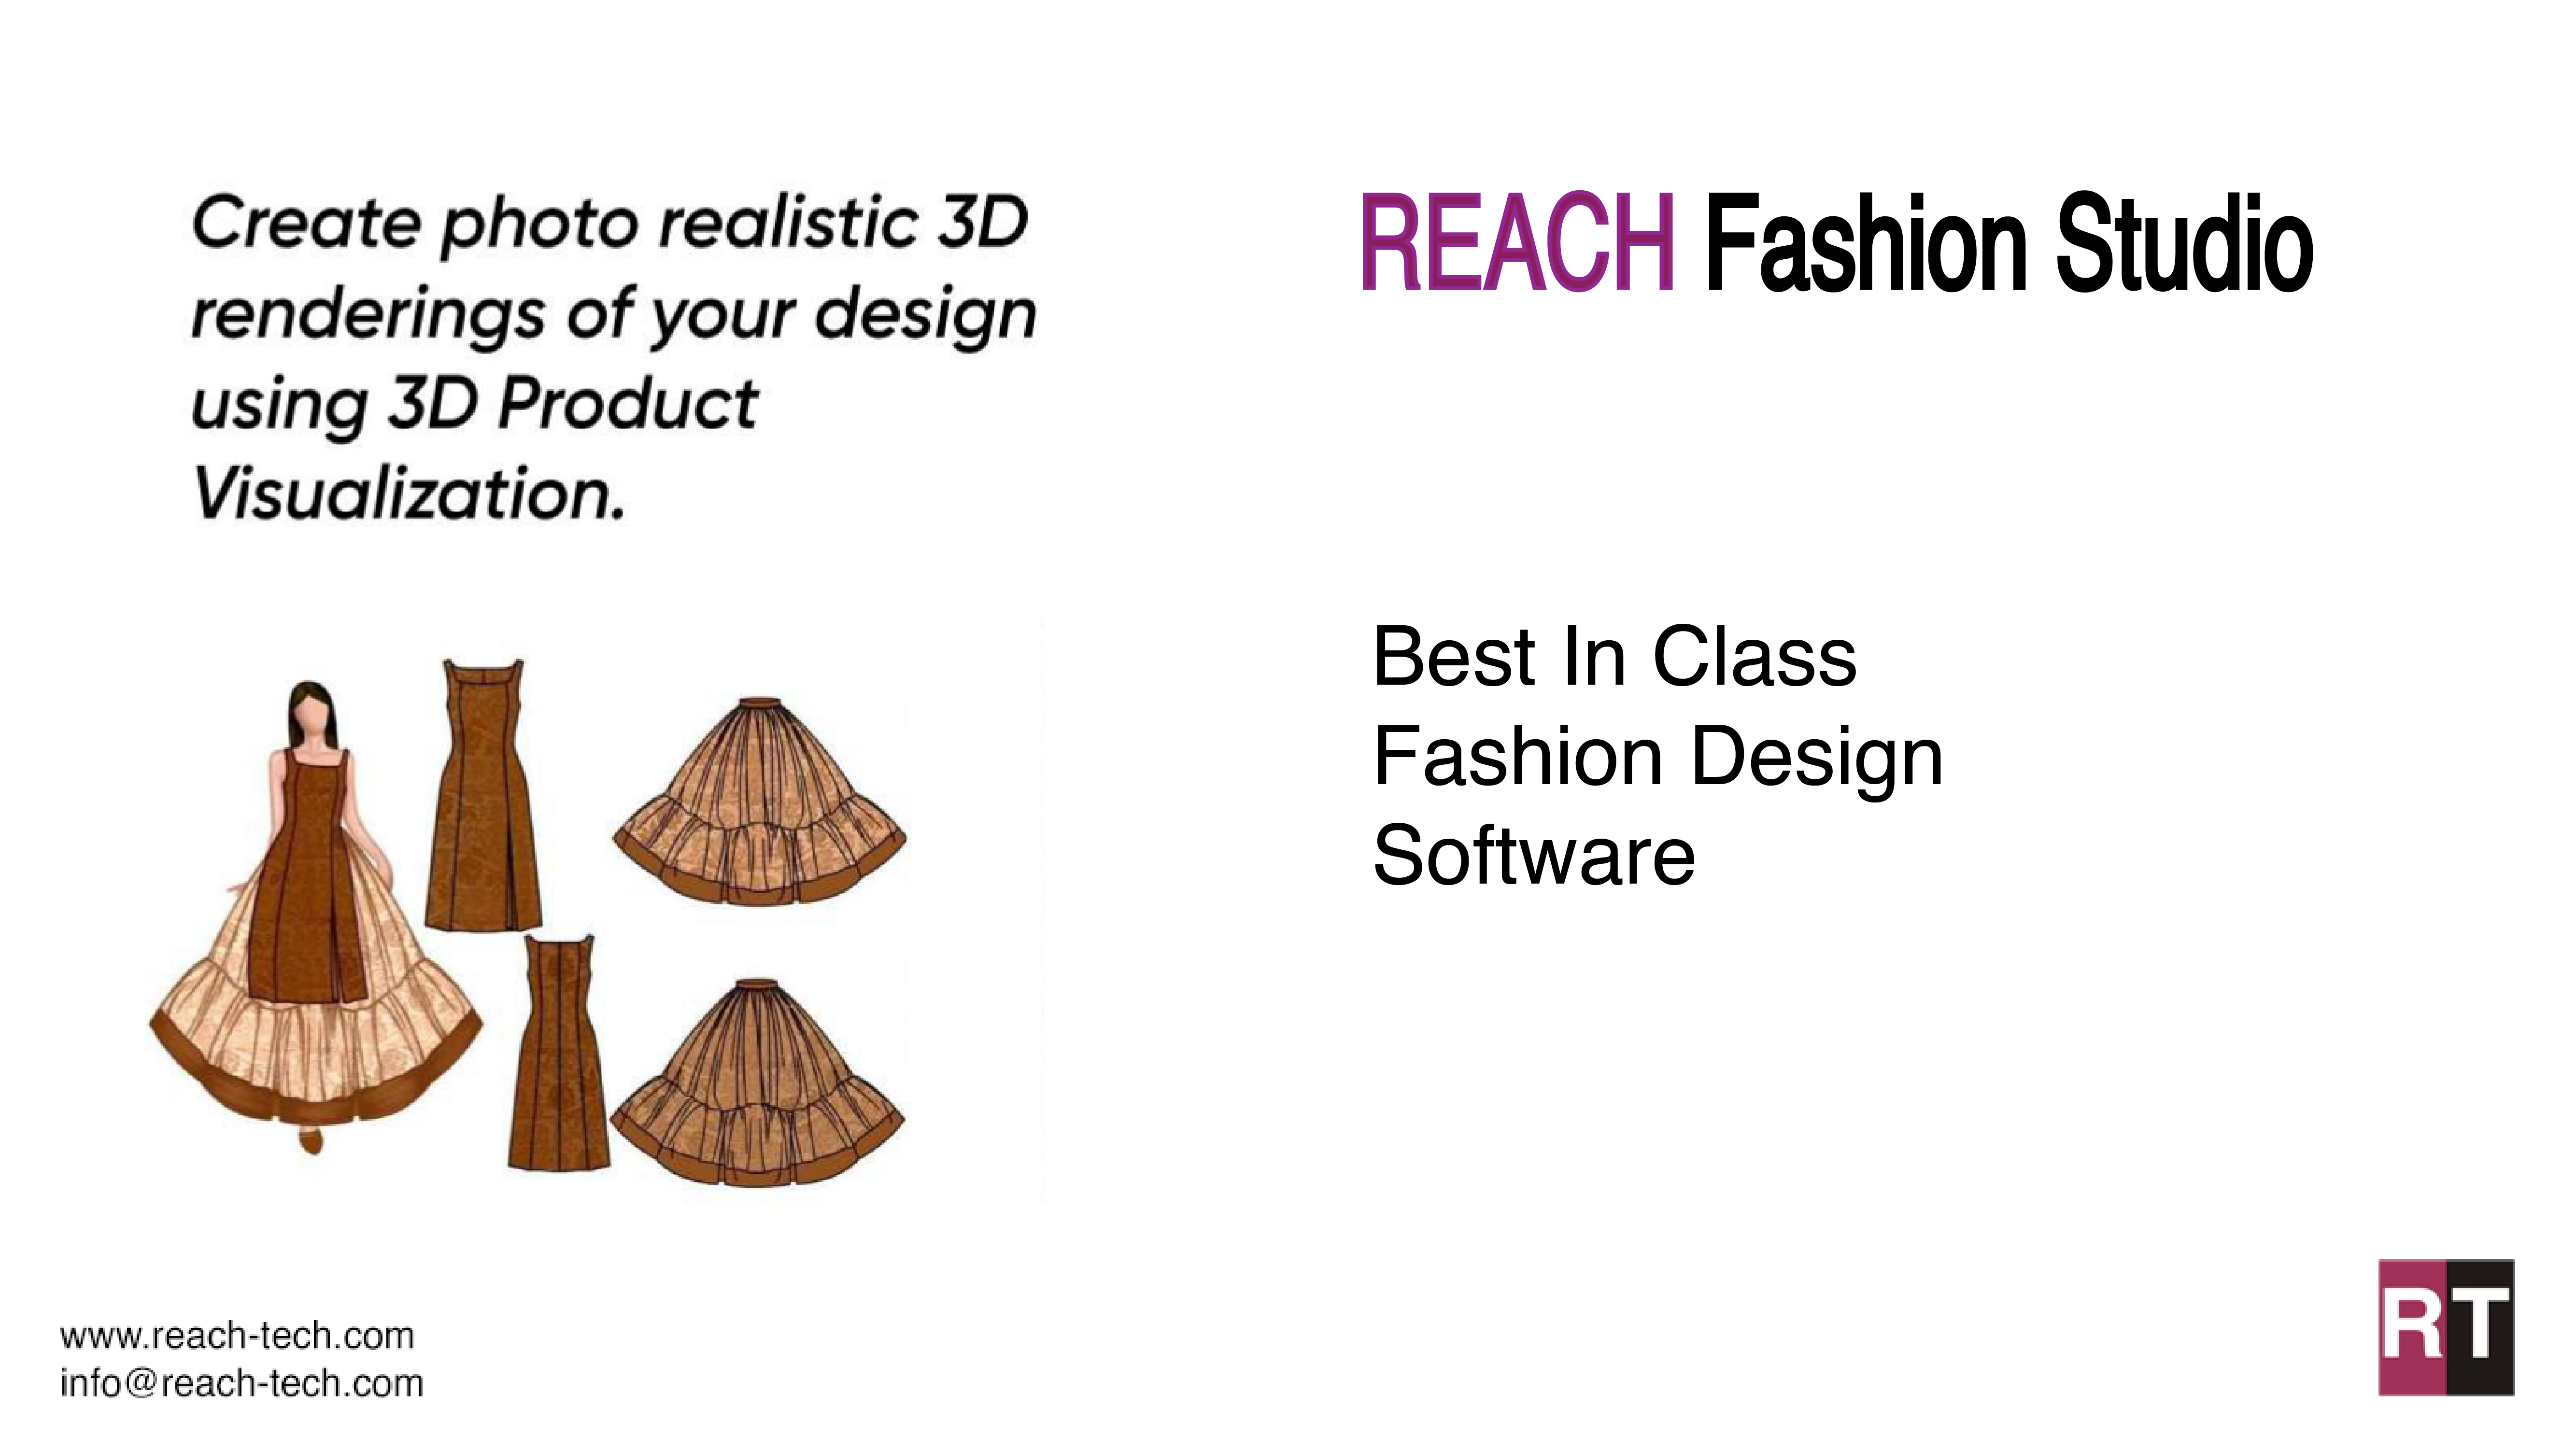 Reach Fashion Studio poster Image 20